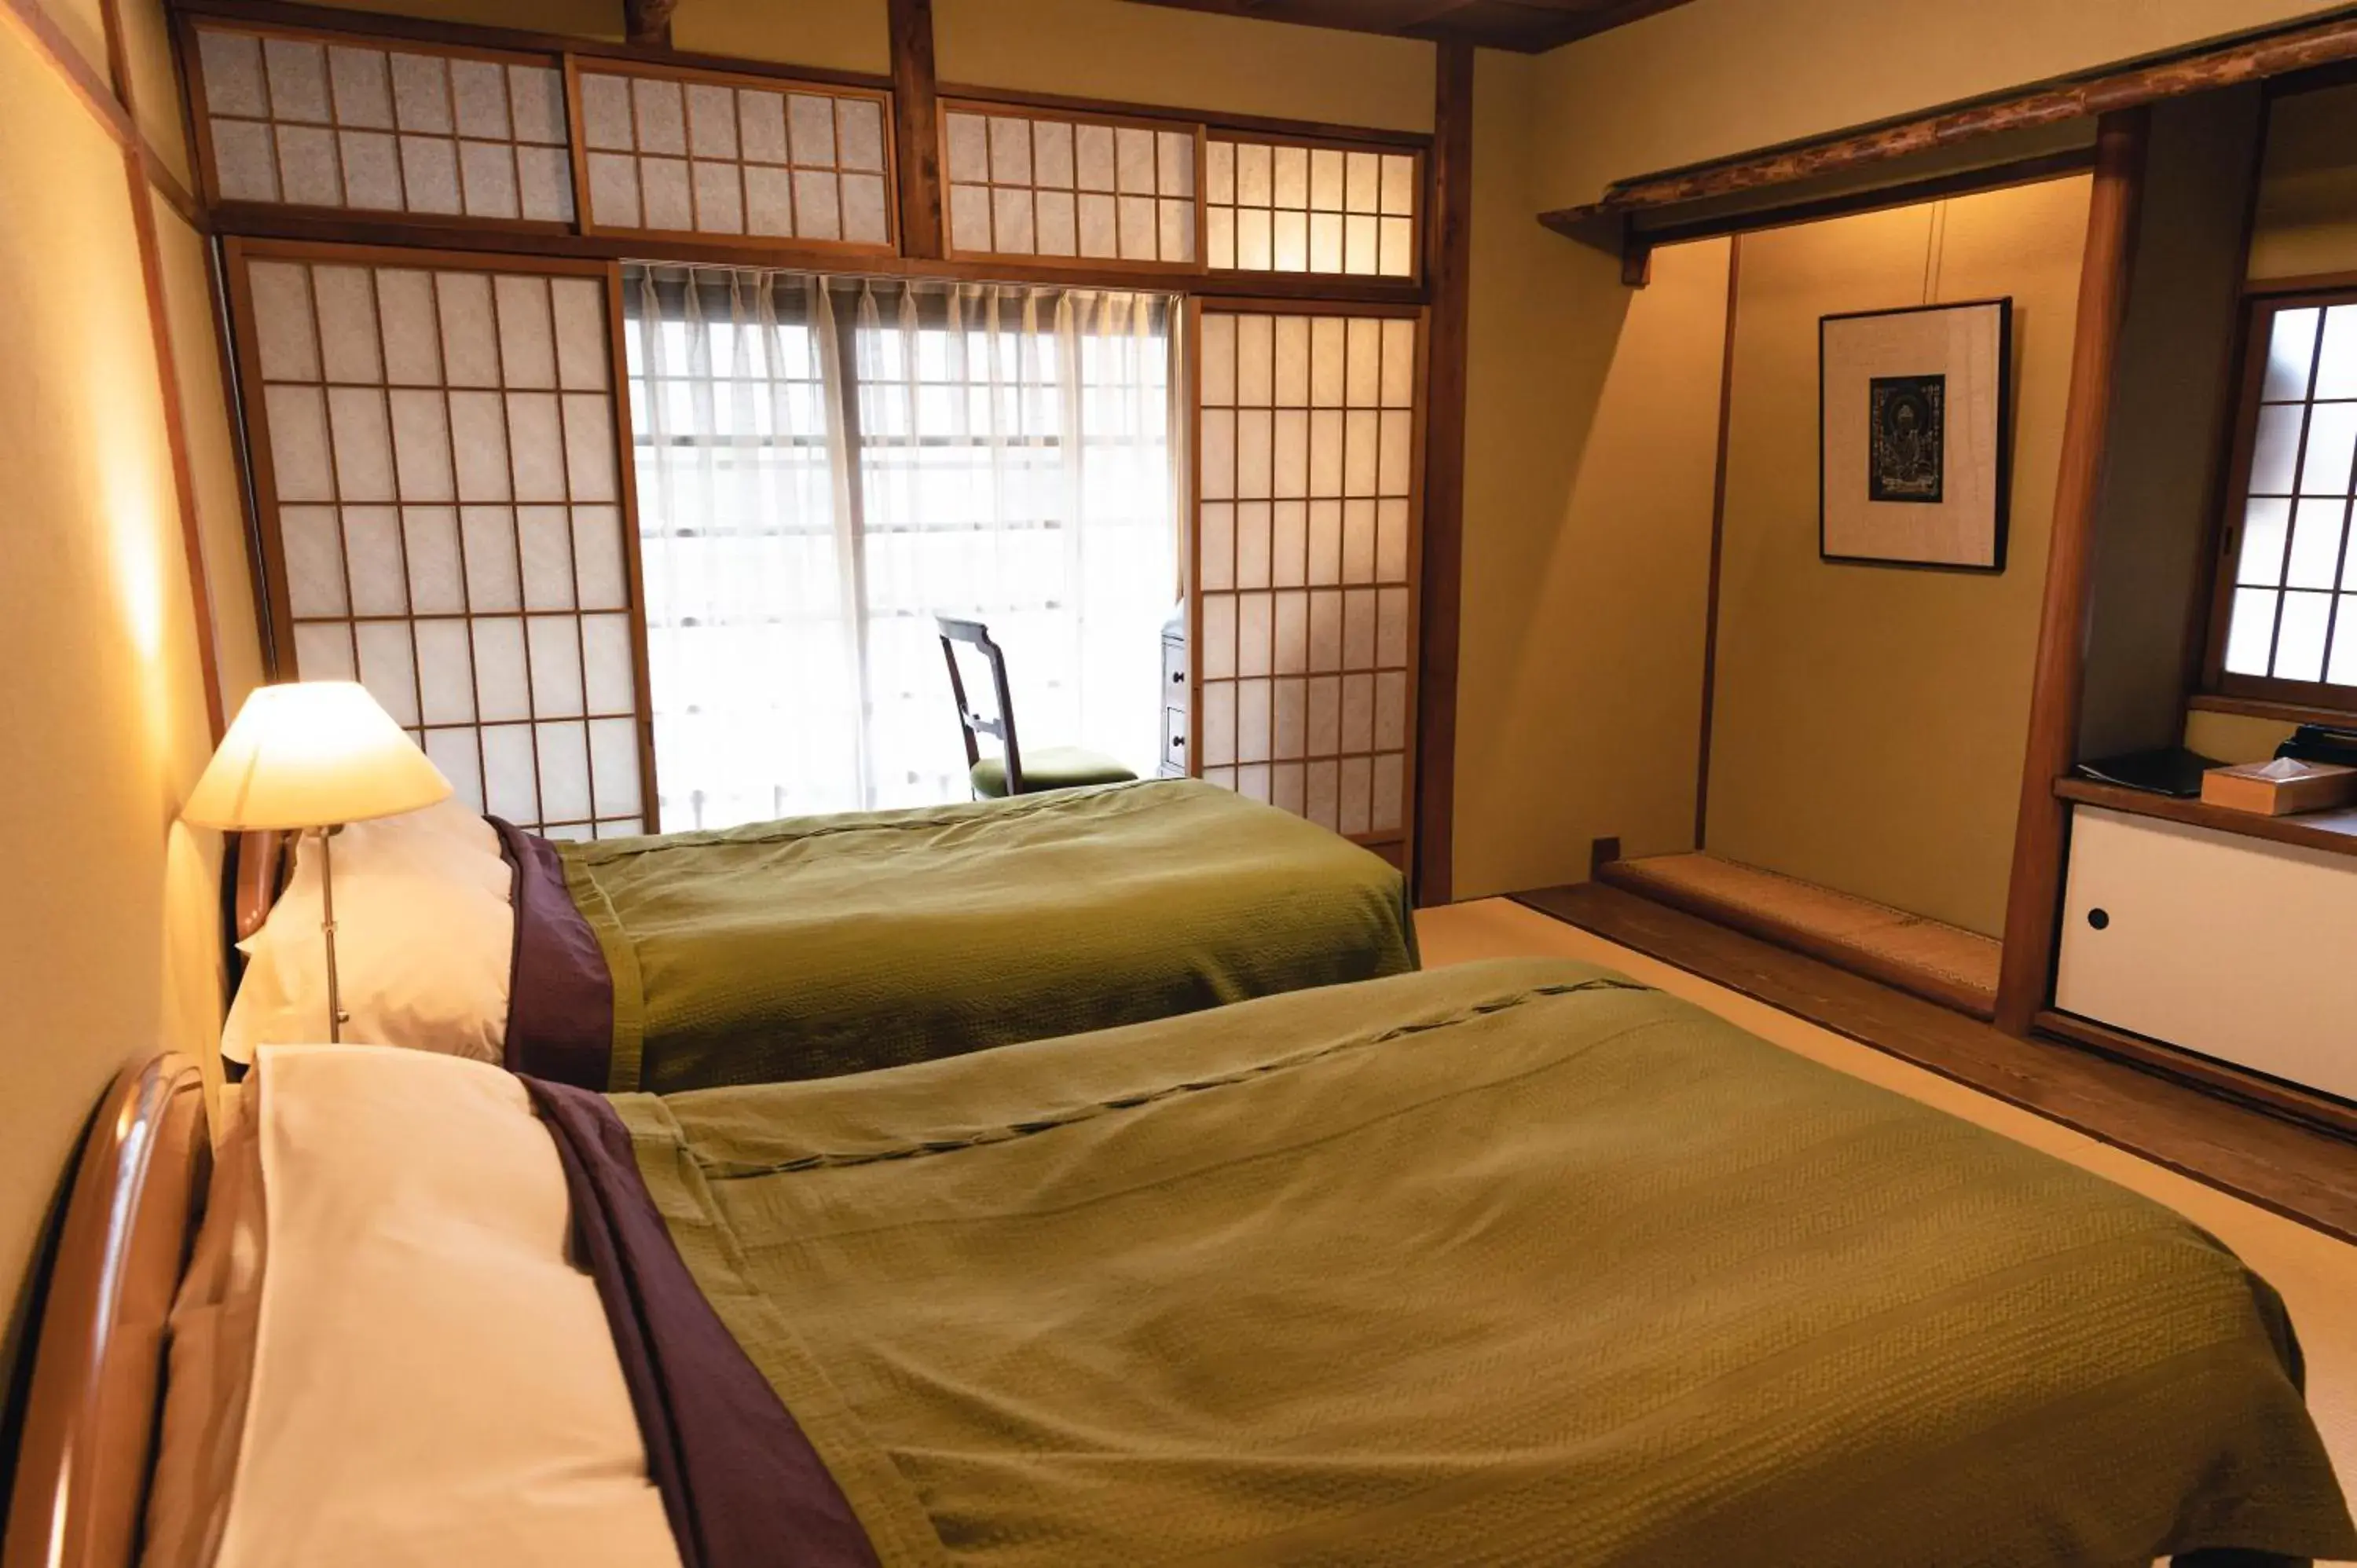 Deluxe Twin Room with Tatami Floor and Shared Bathroom - single occupancy - Room Only in Hotel Hanakoyado